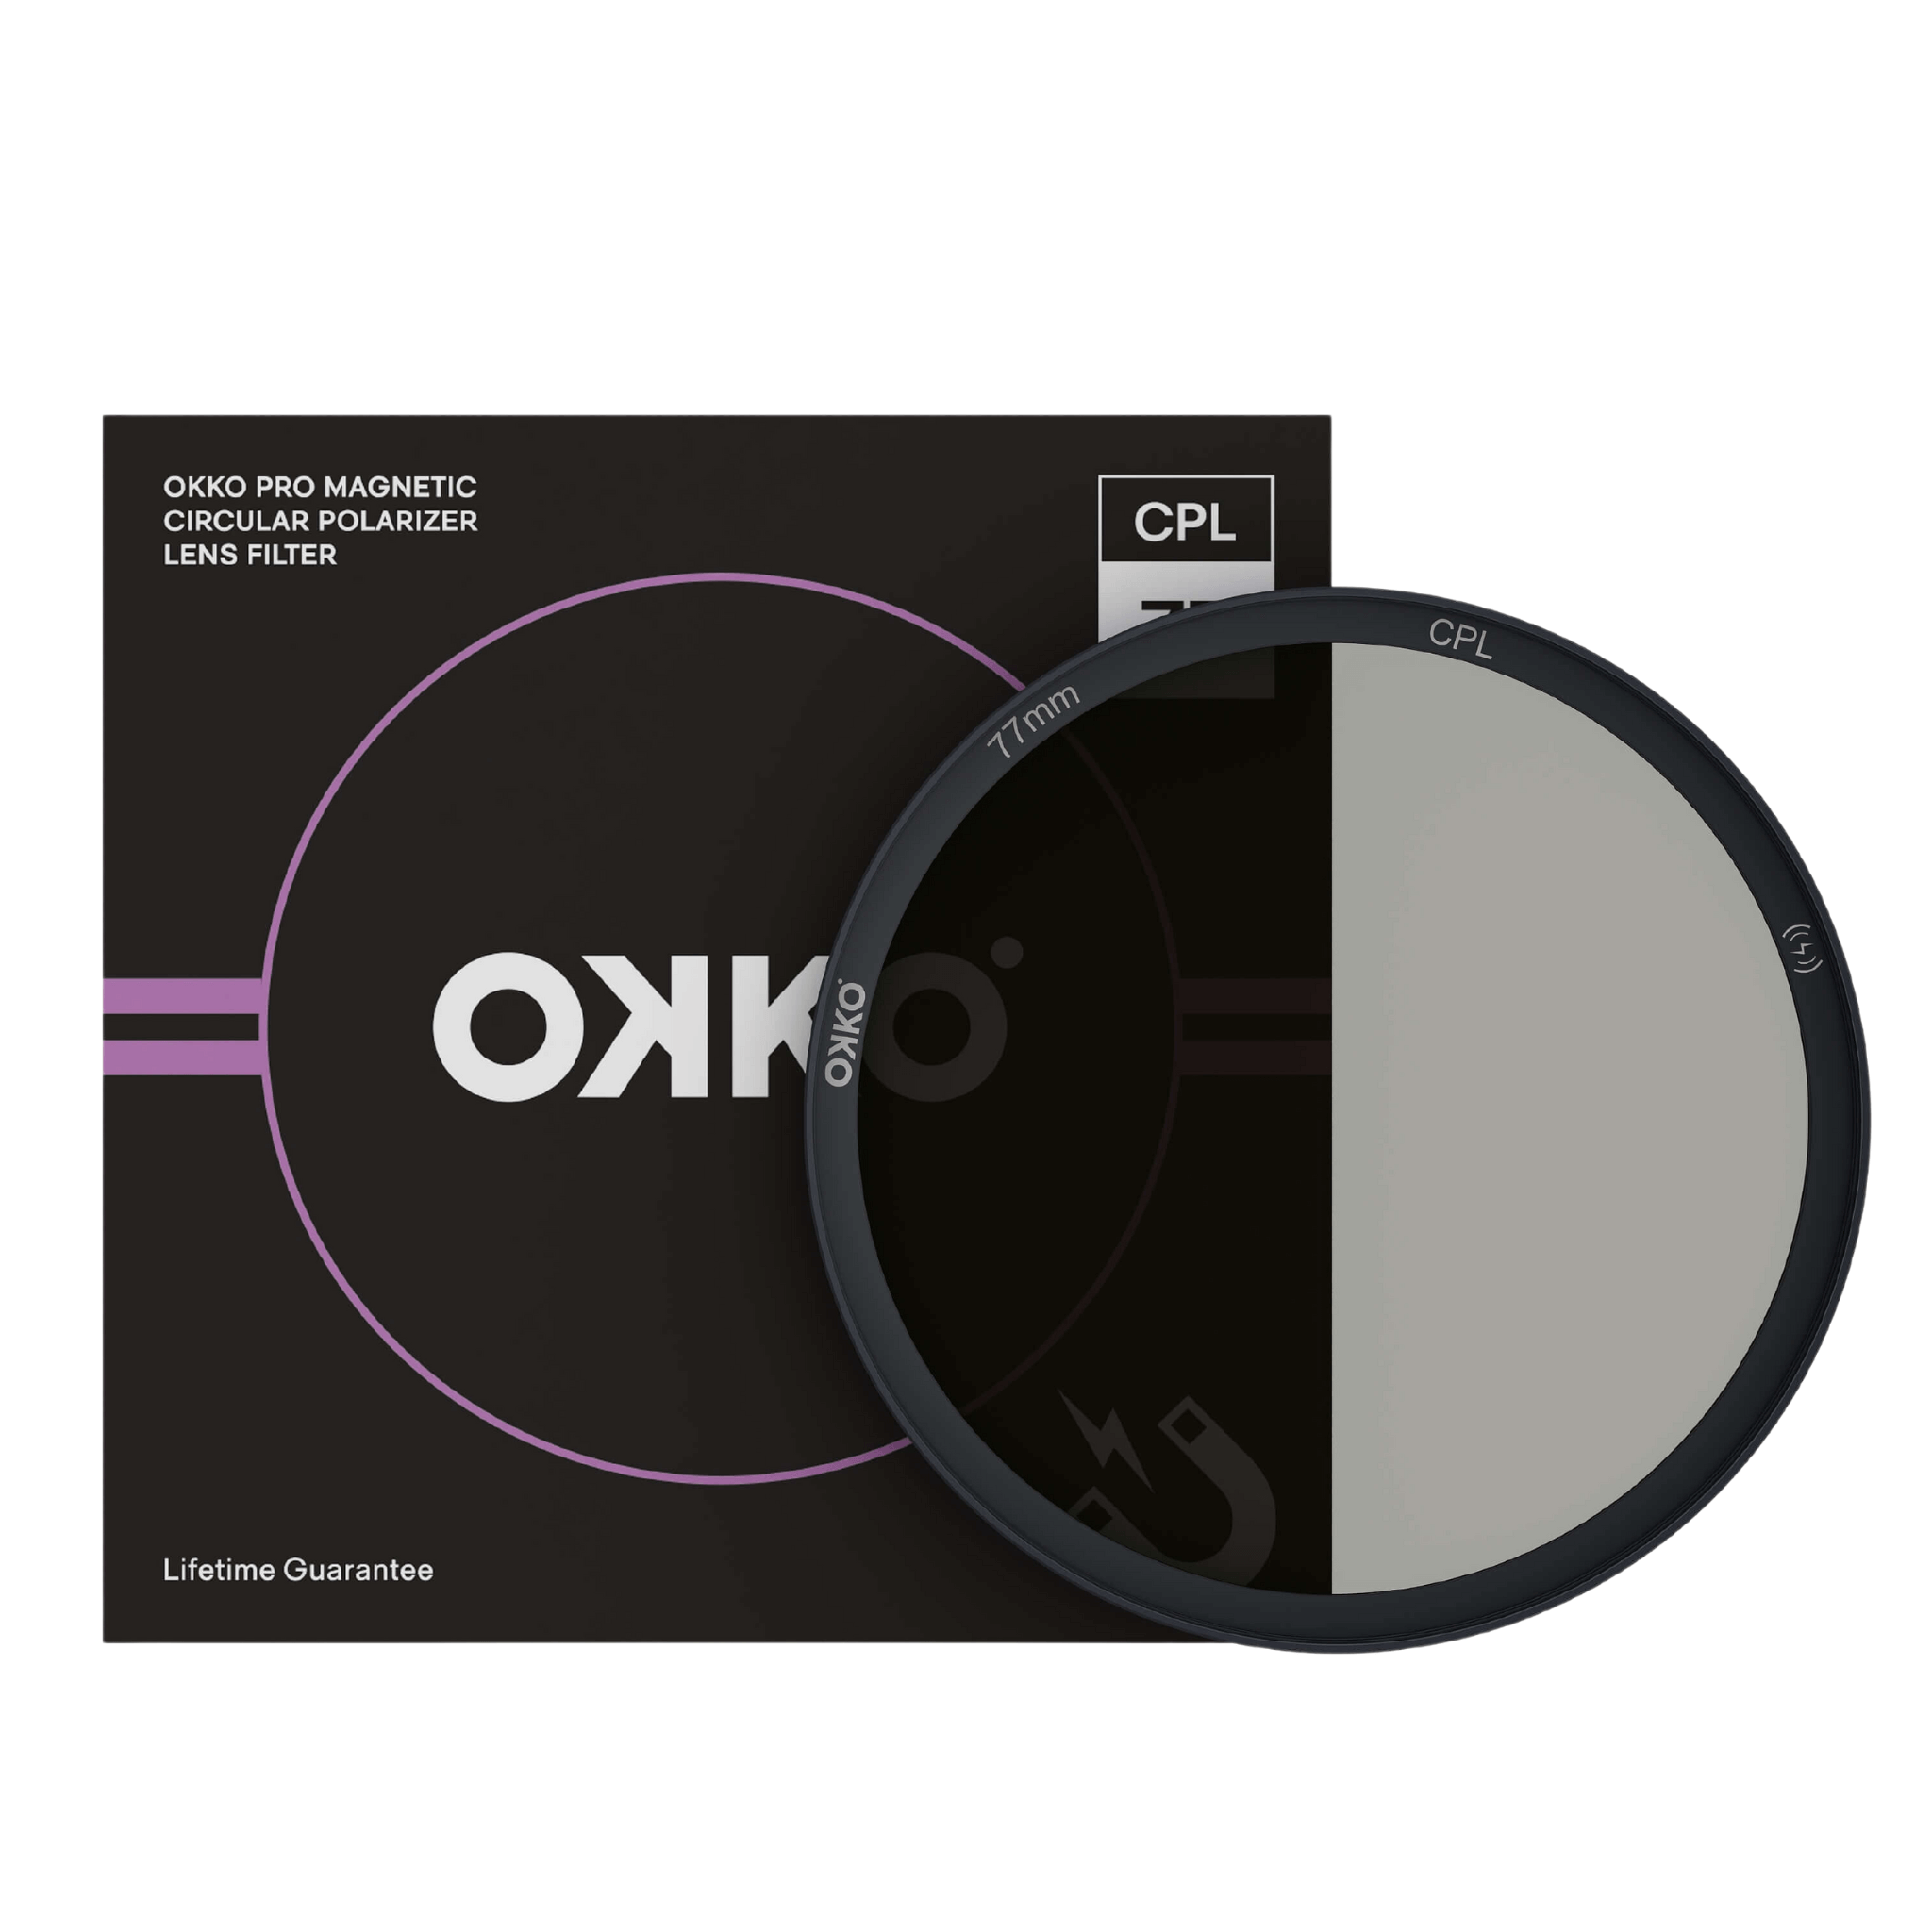 Okko Pro Magnetic Circular Polarizer Filter